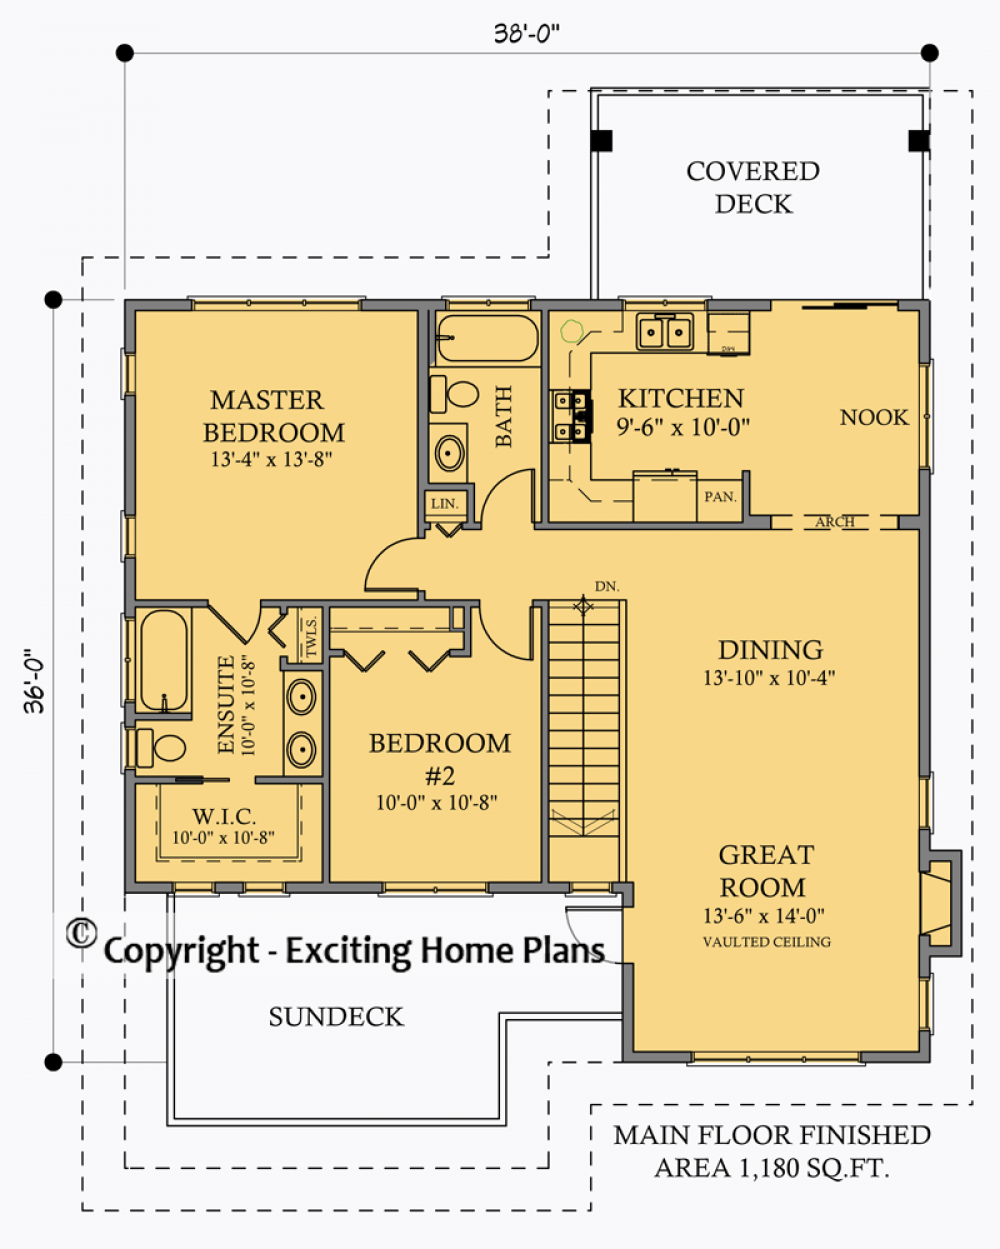 House Plan E1039-10 Main Floor Plan